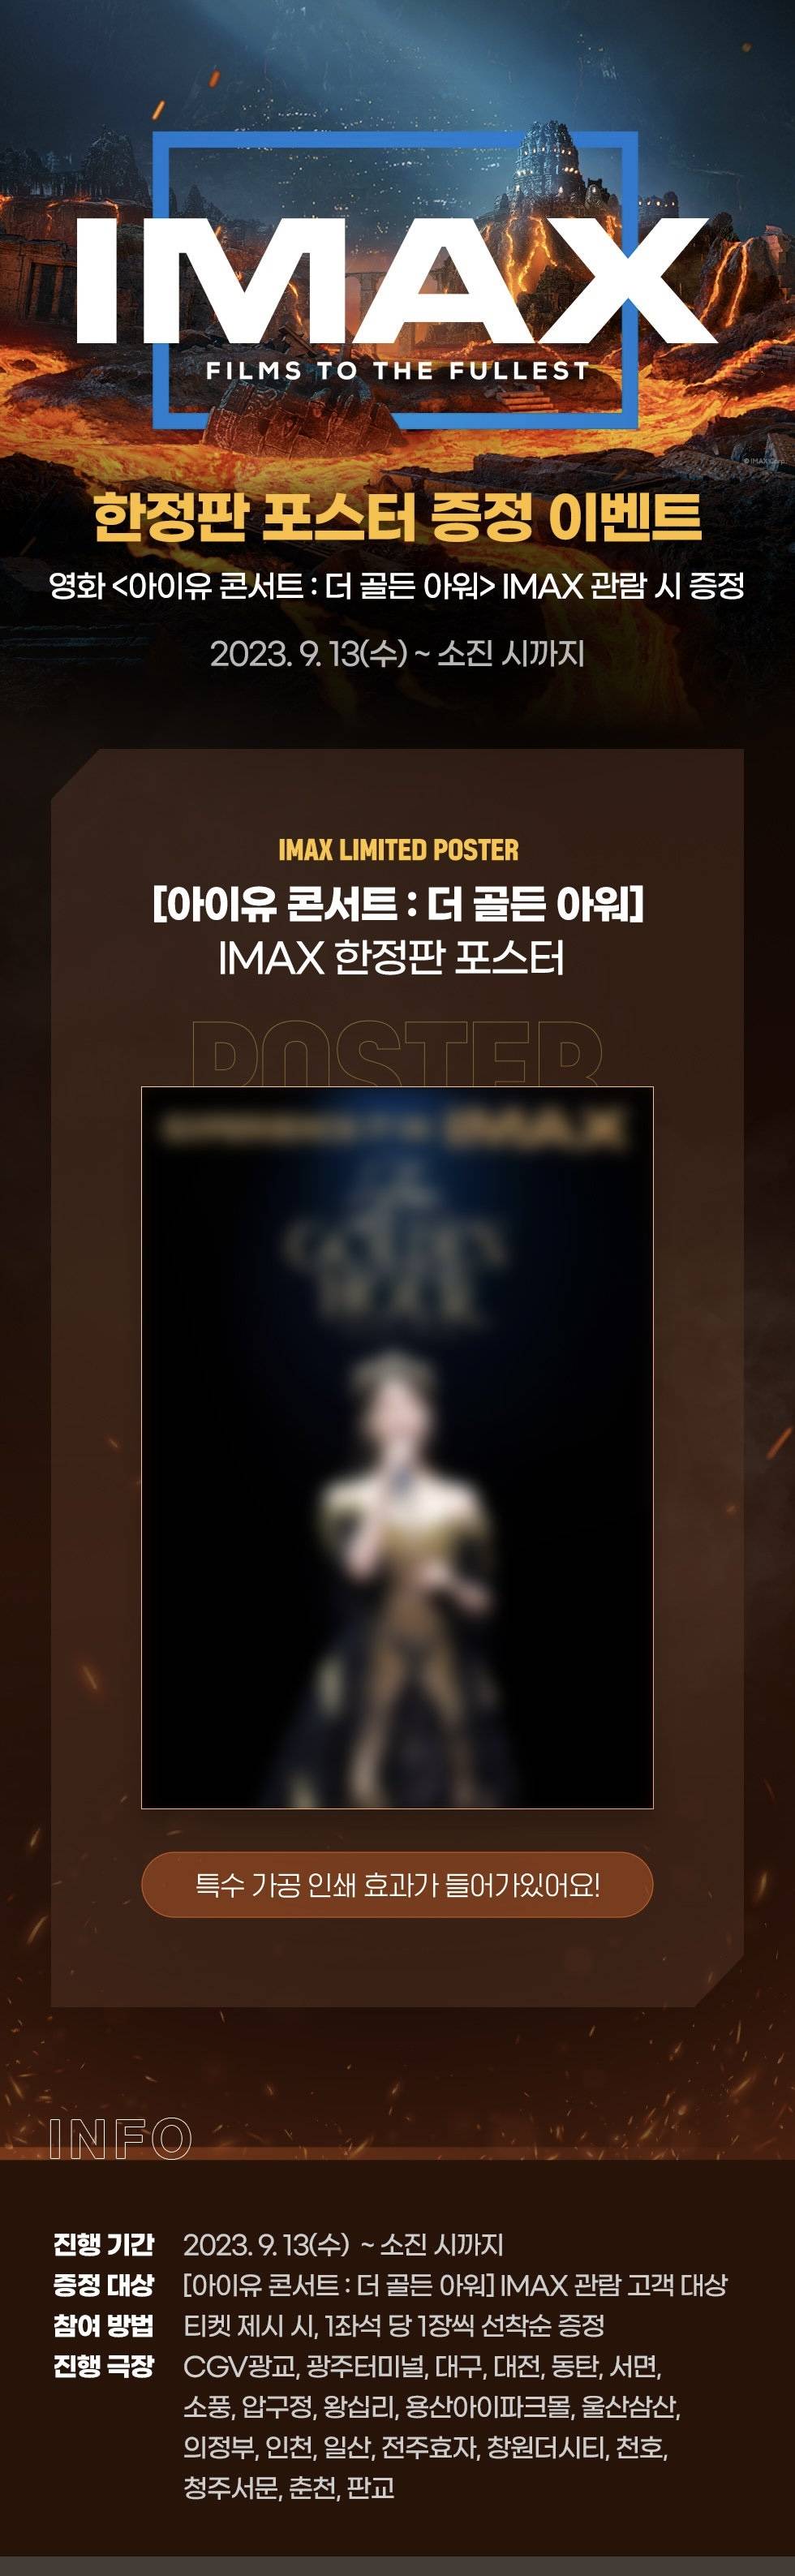 CGV 아이유 콘서트 아이맥스 개봉 이벤트 포스터 특전 공개 | 인스티즈